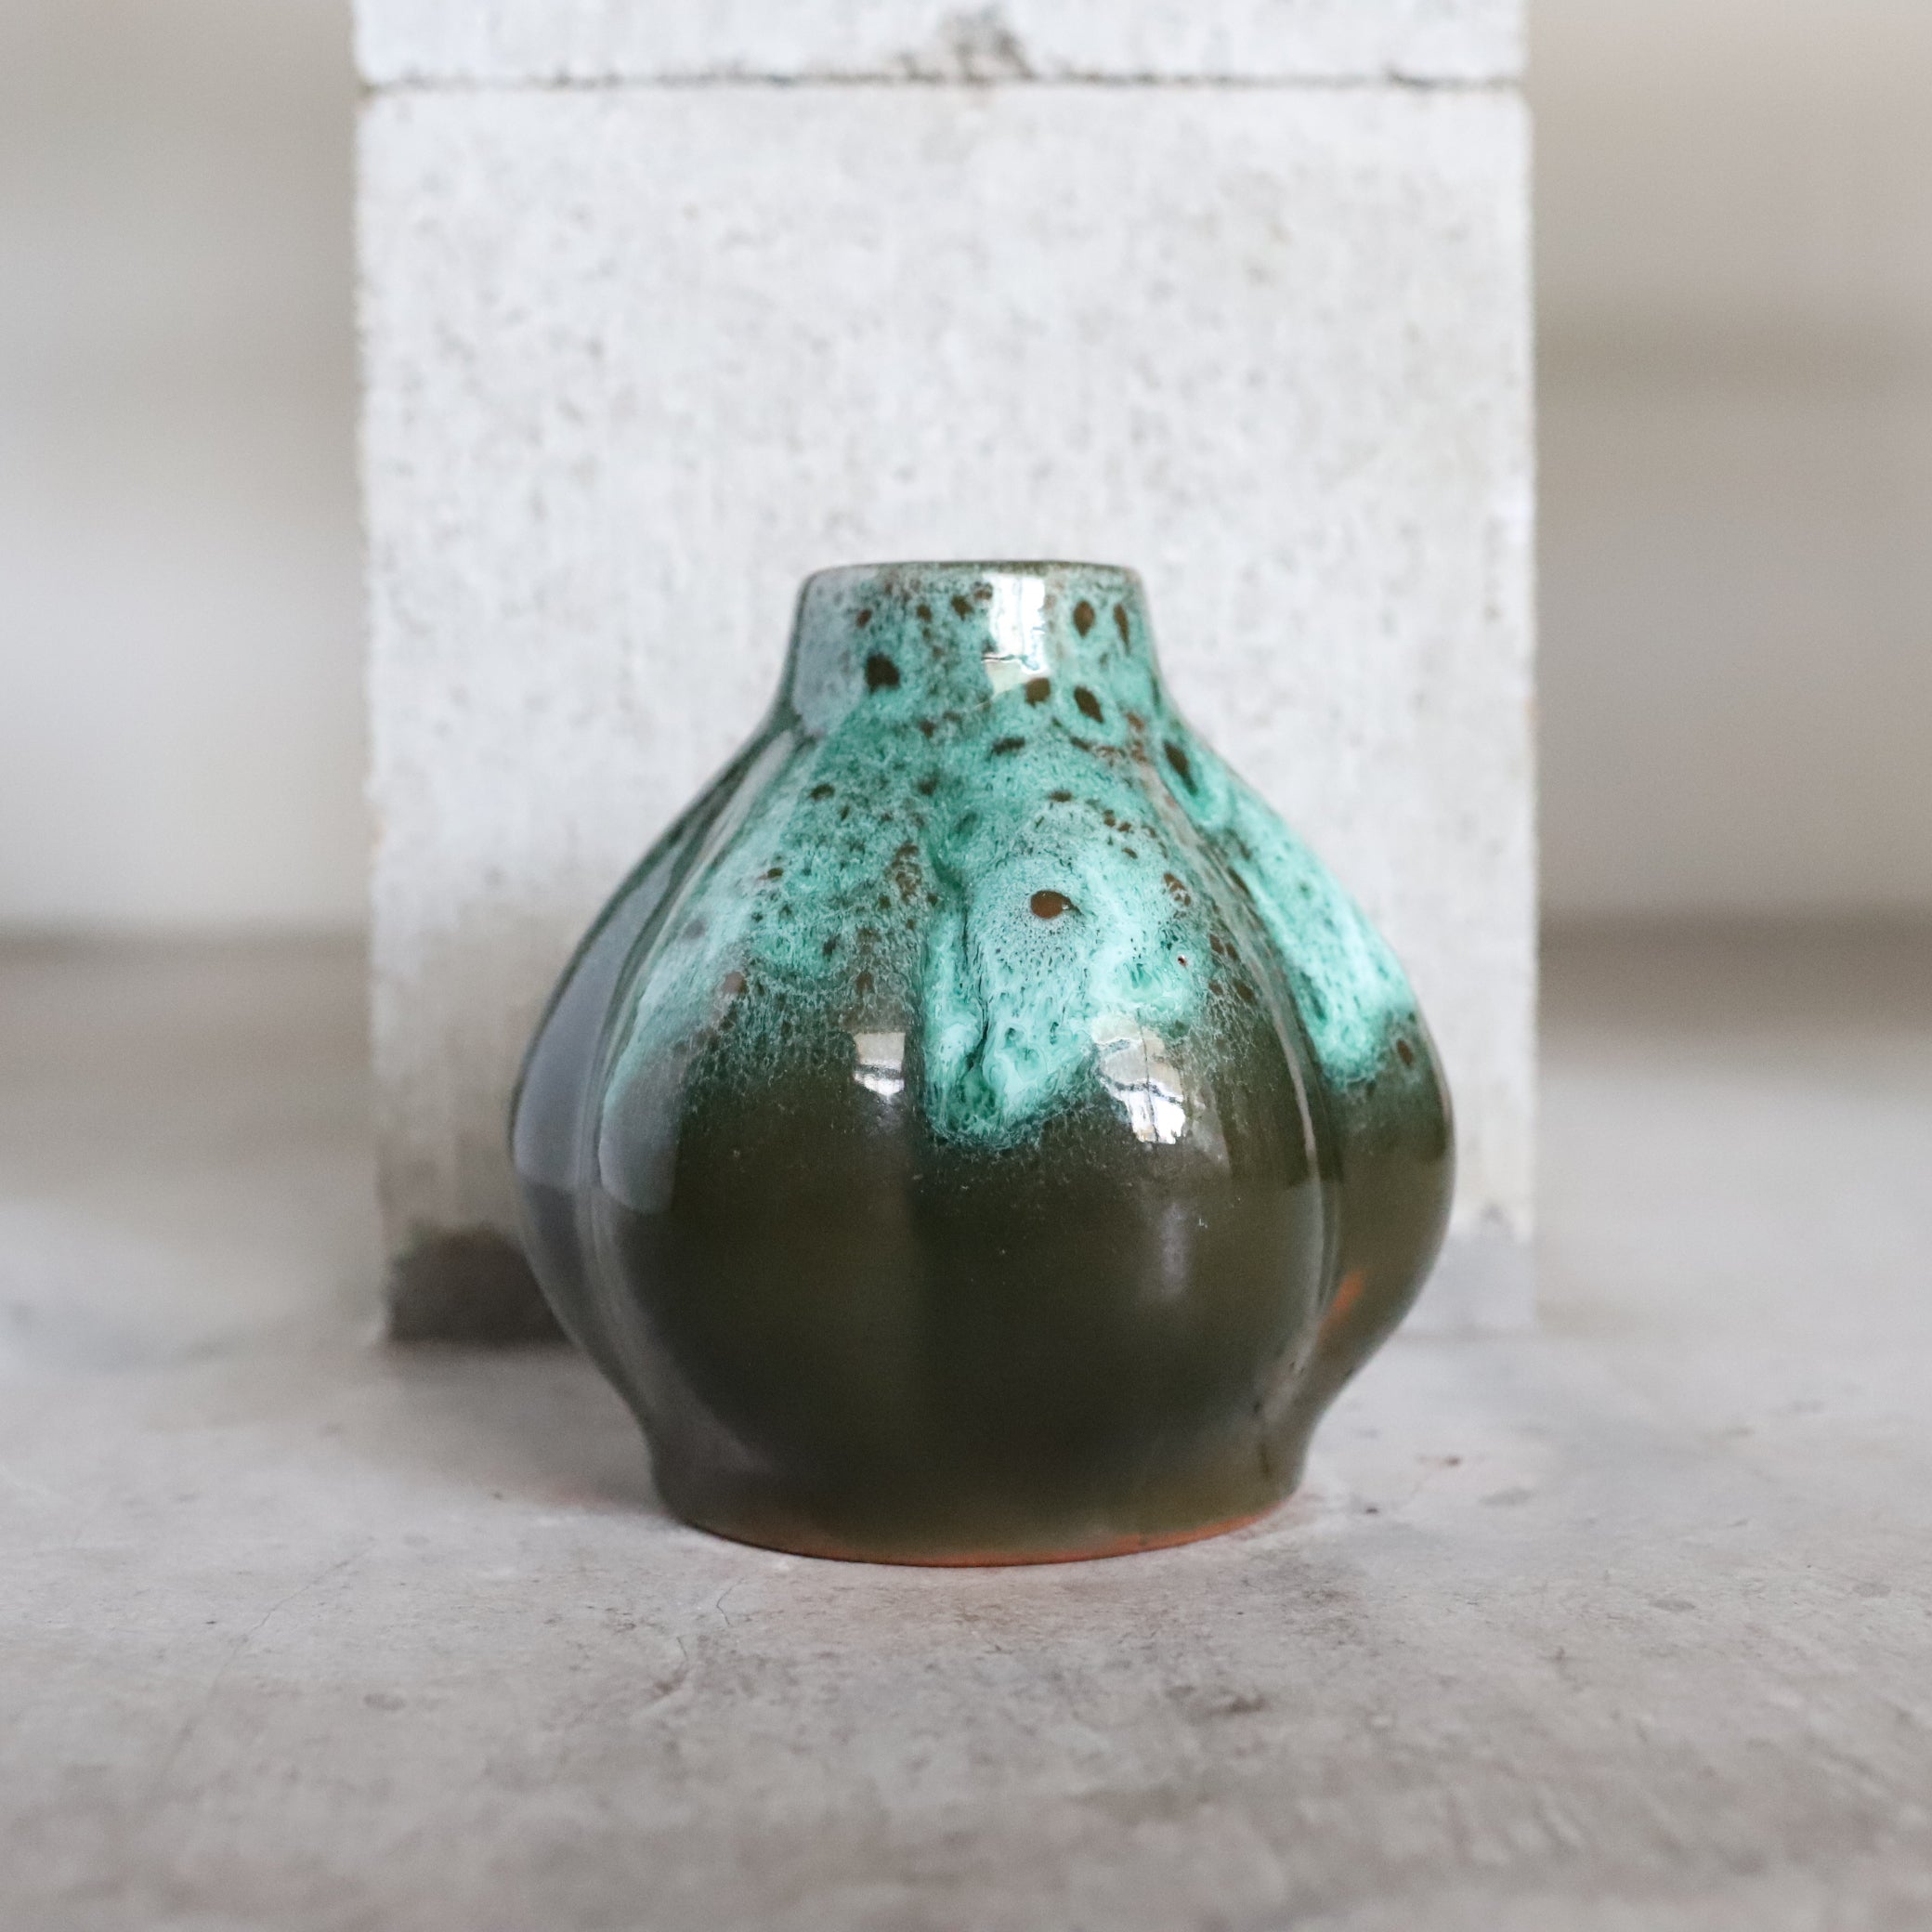 July Vase #3